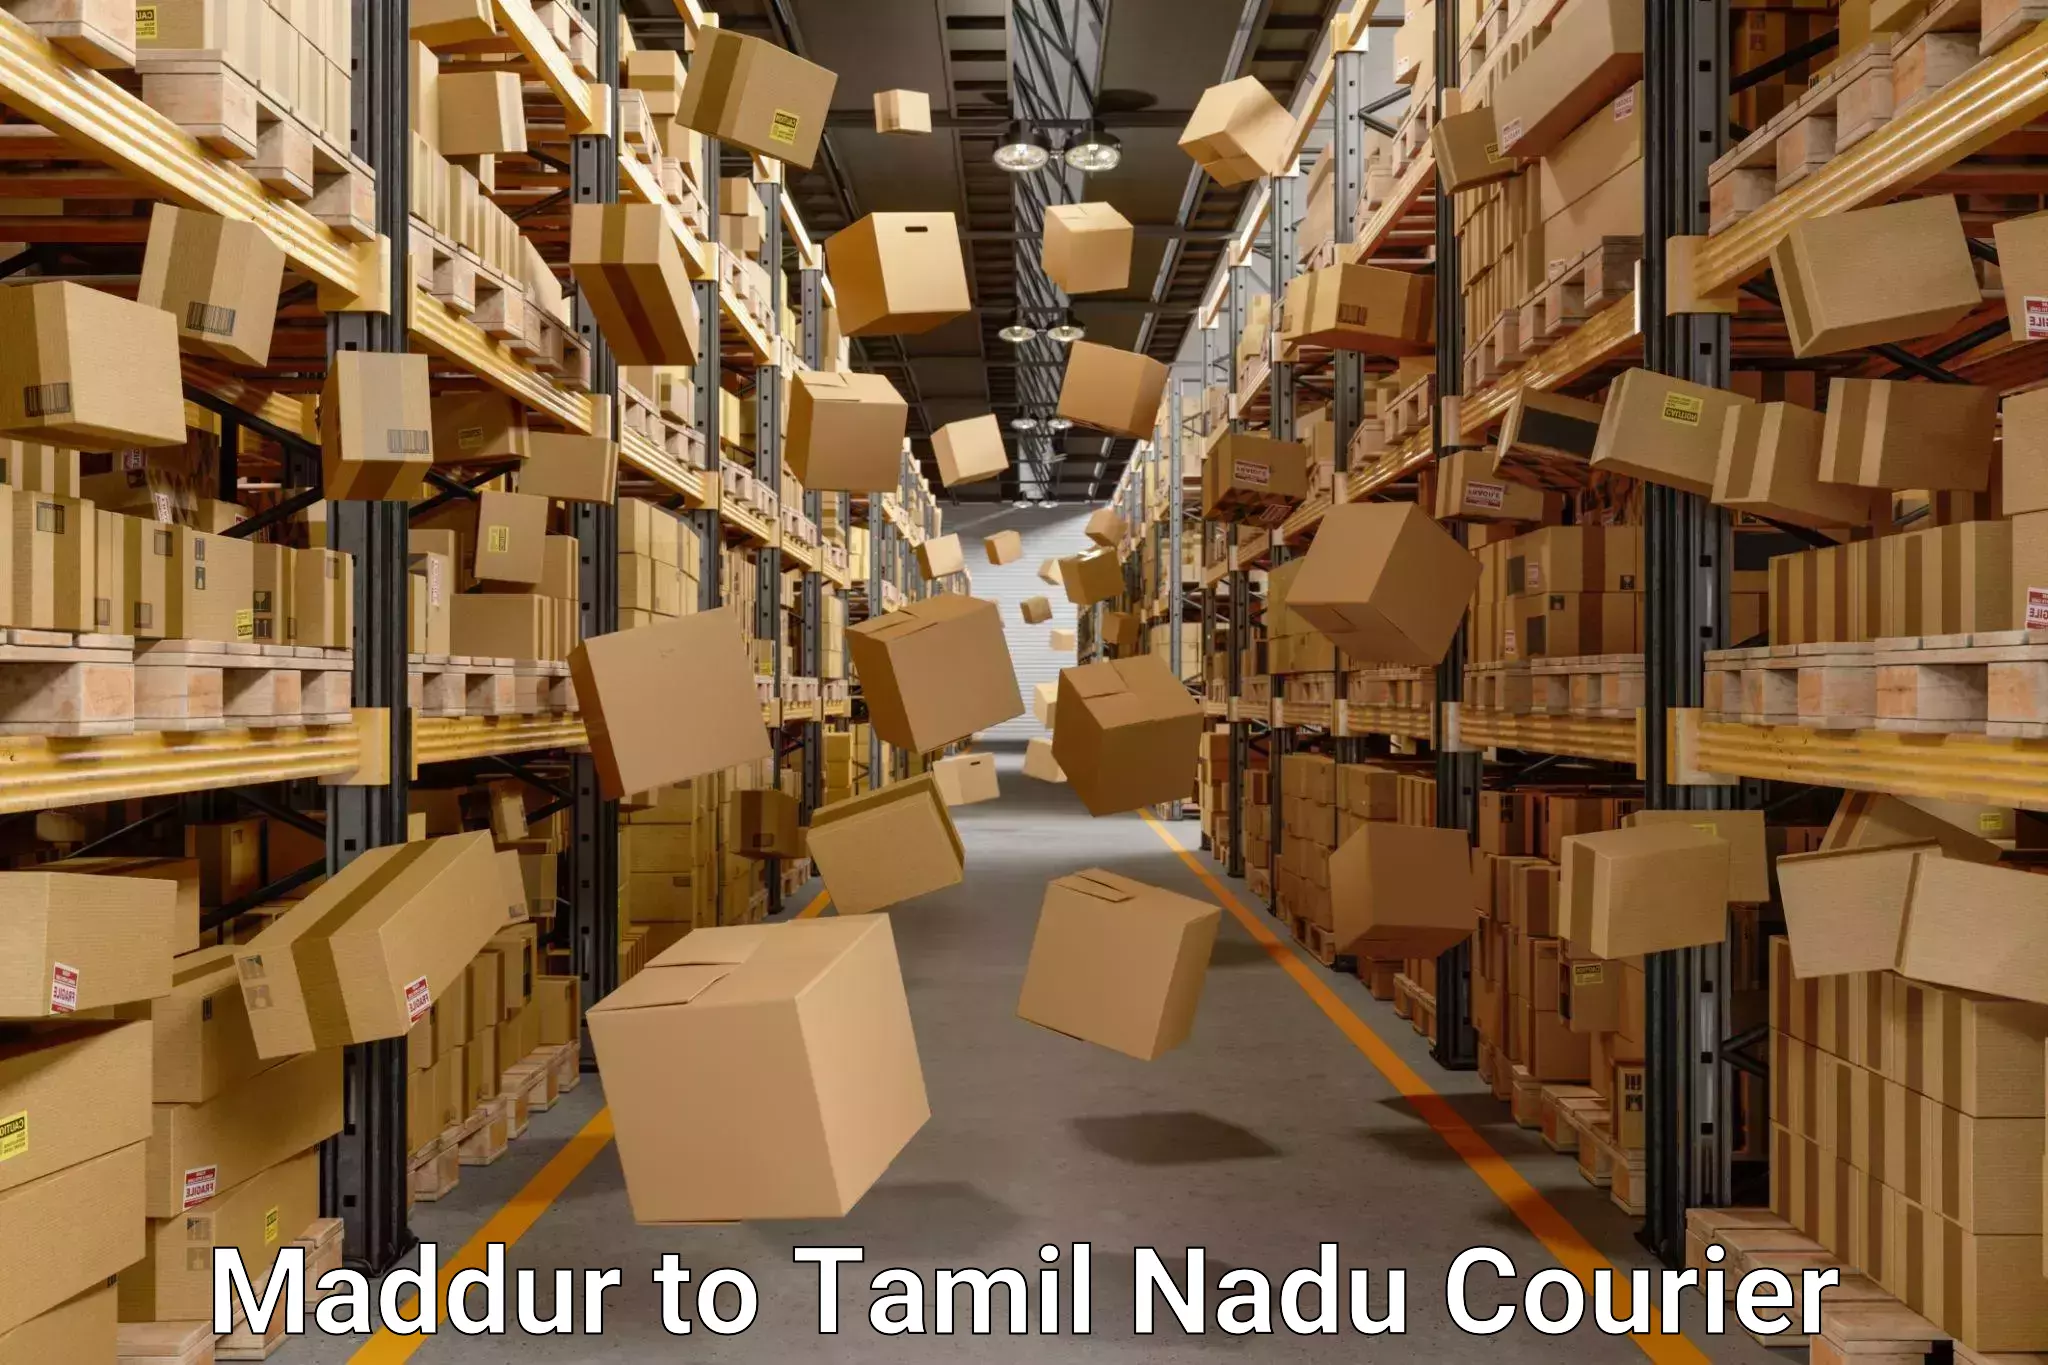 Professional furniture movers in Maddur to Thiruvadanai